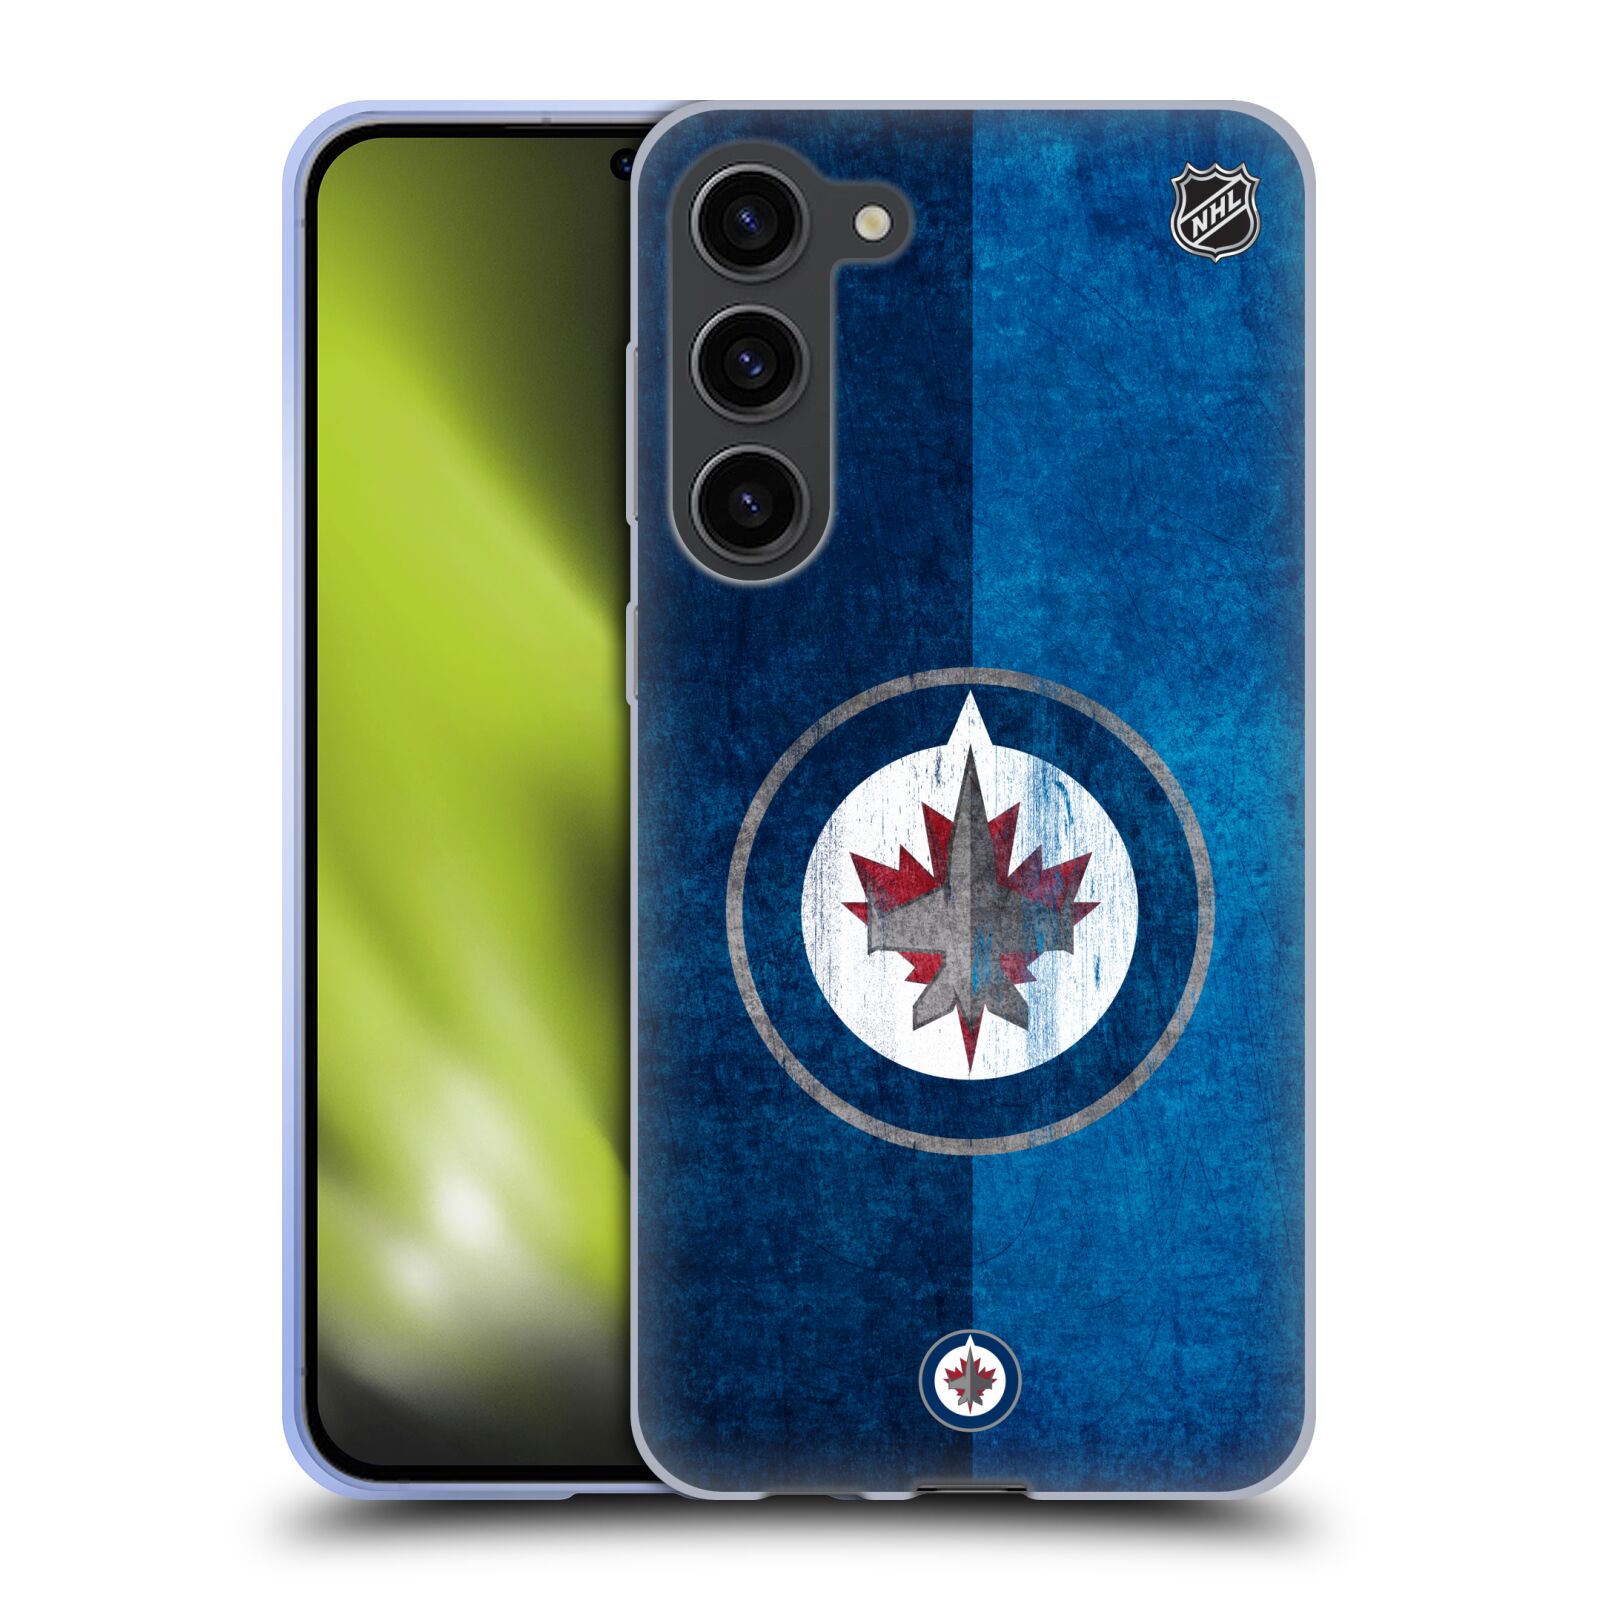 Silikonové pouzdro na mobil Samsung Galaxy S23 Plus - NHL - Půlené logo Winnipeg Jets (Silikonový kryt, obal, pouzdro na mobilní telefon Samsung Galaxy S23 Plus s licencovaným motivem NHL - Půlené logo Winnipeg Jets)